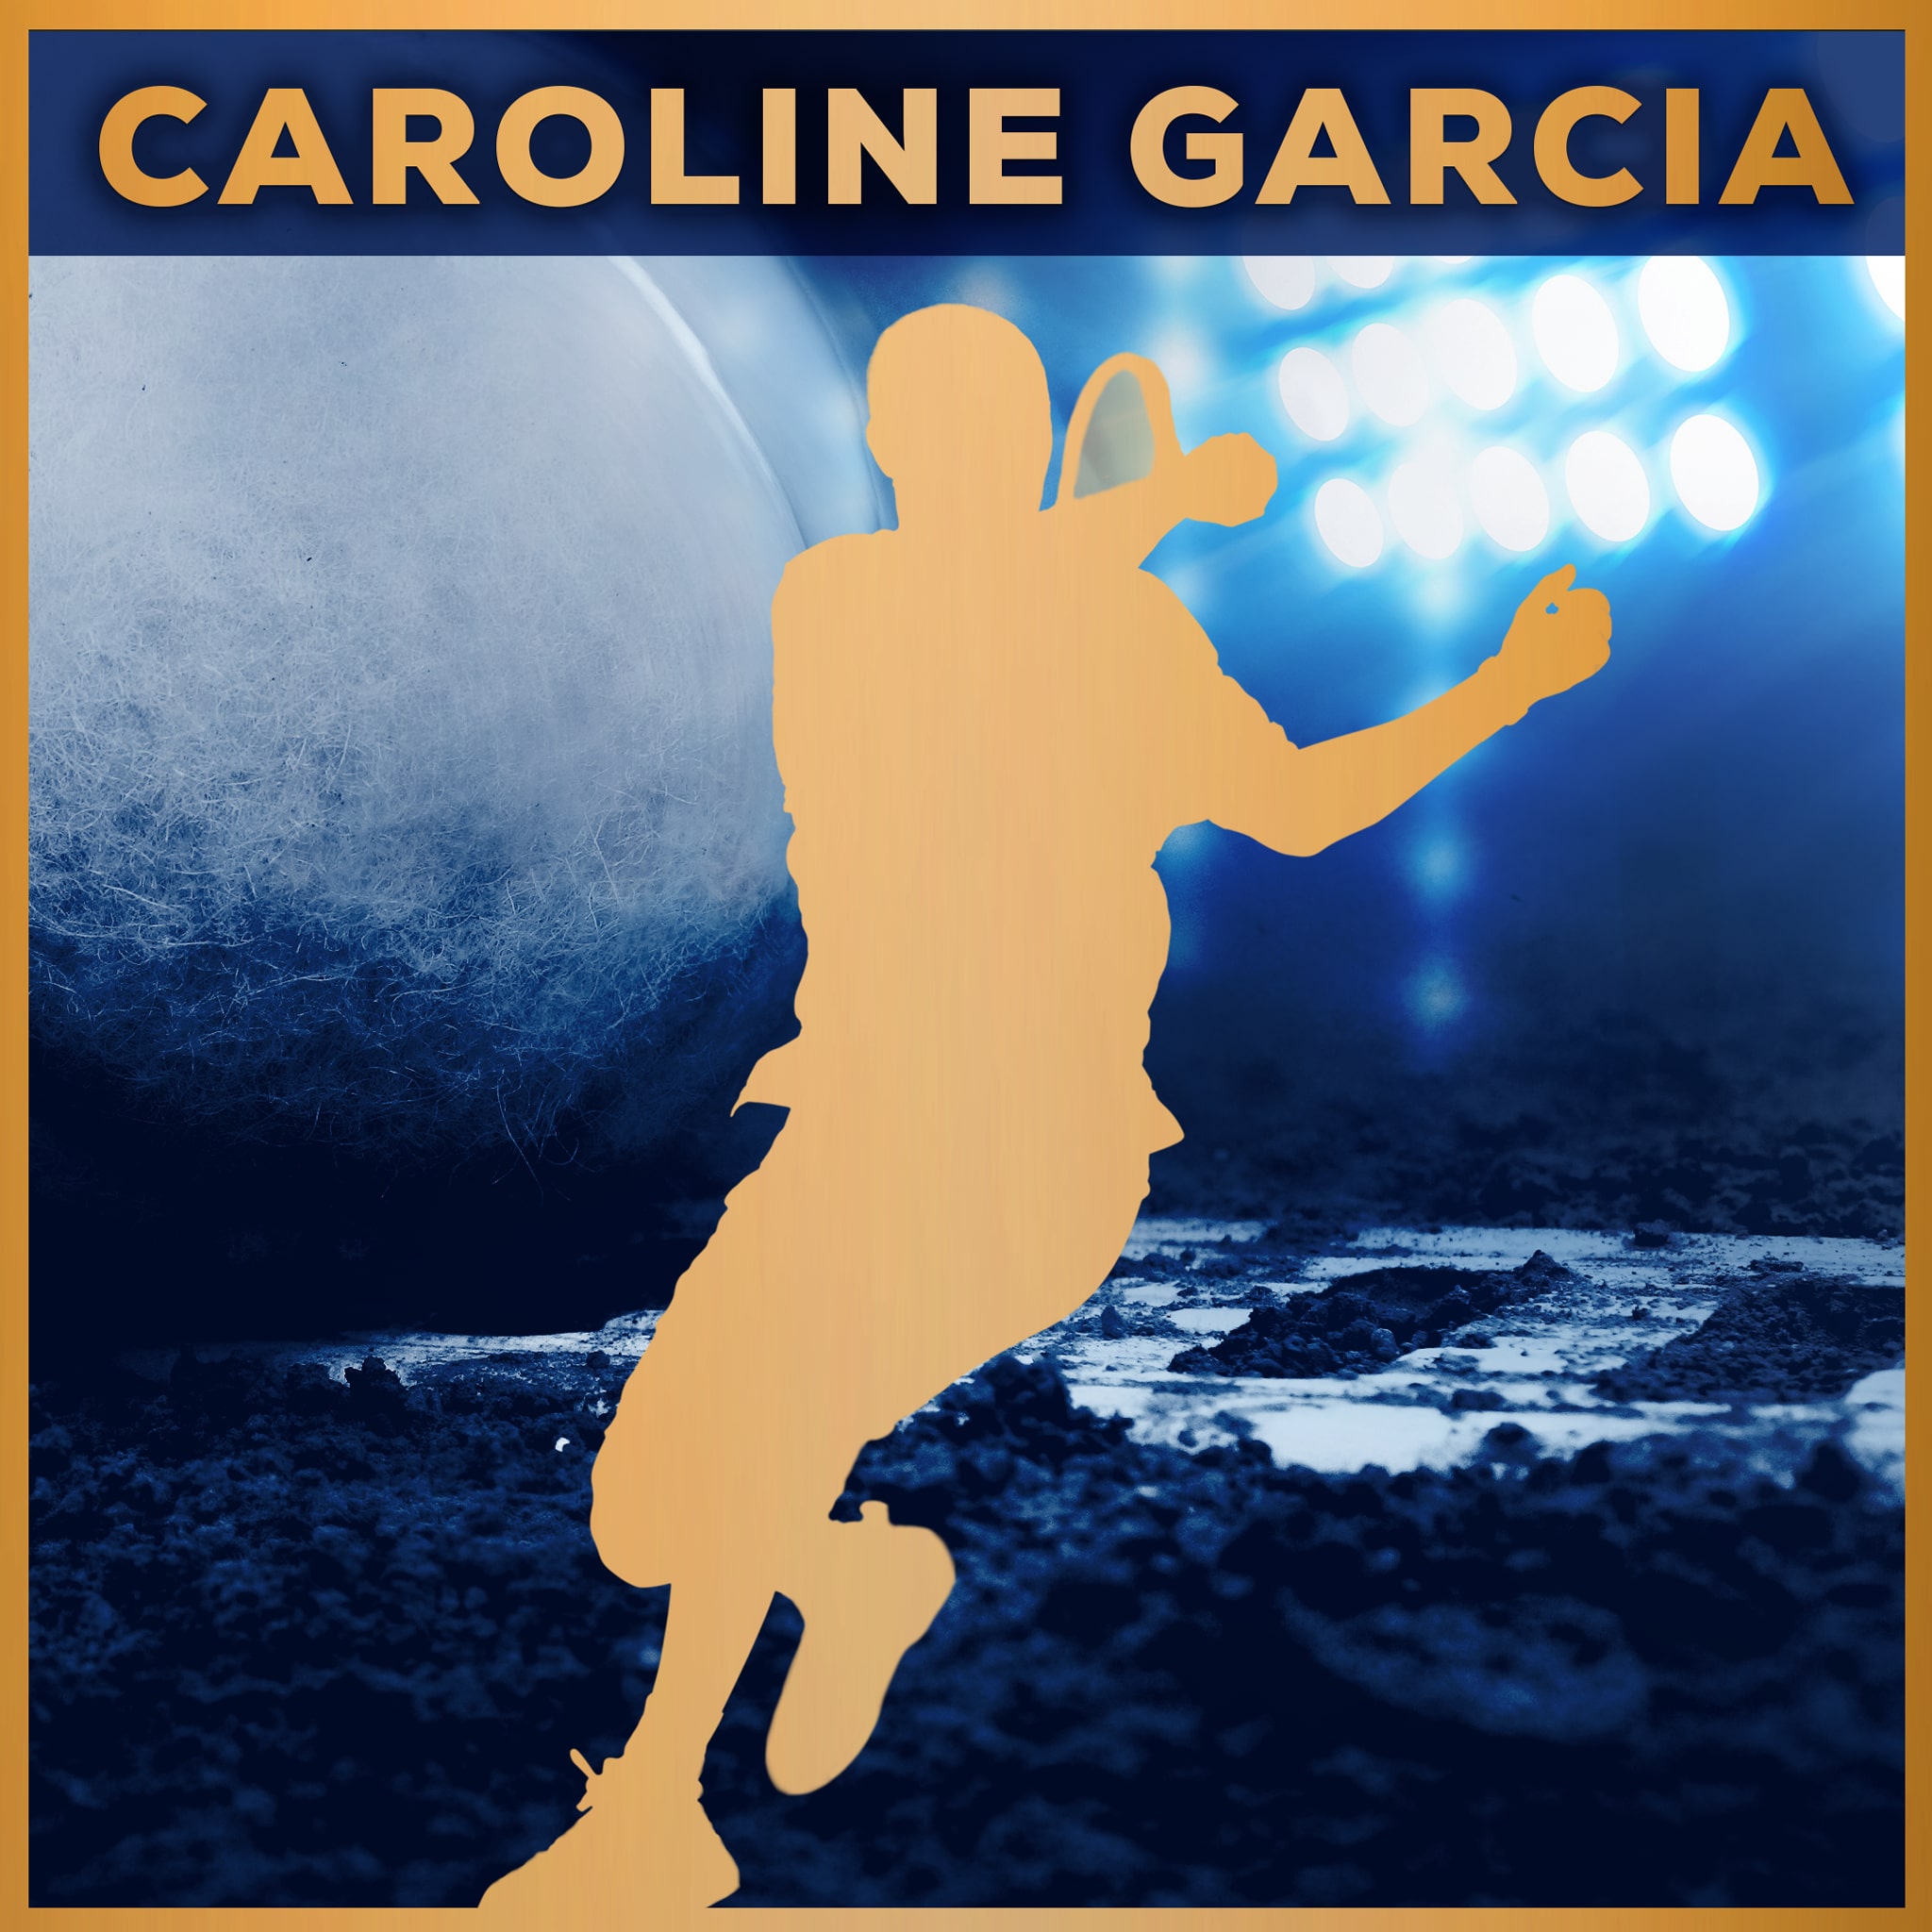 Tennis World Tour - Caroline Garcia